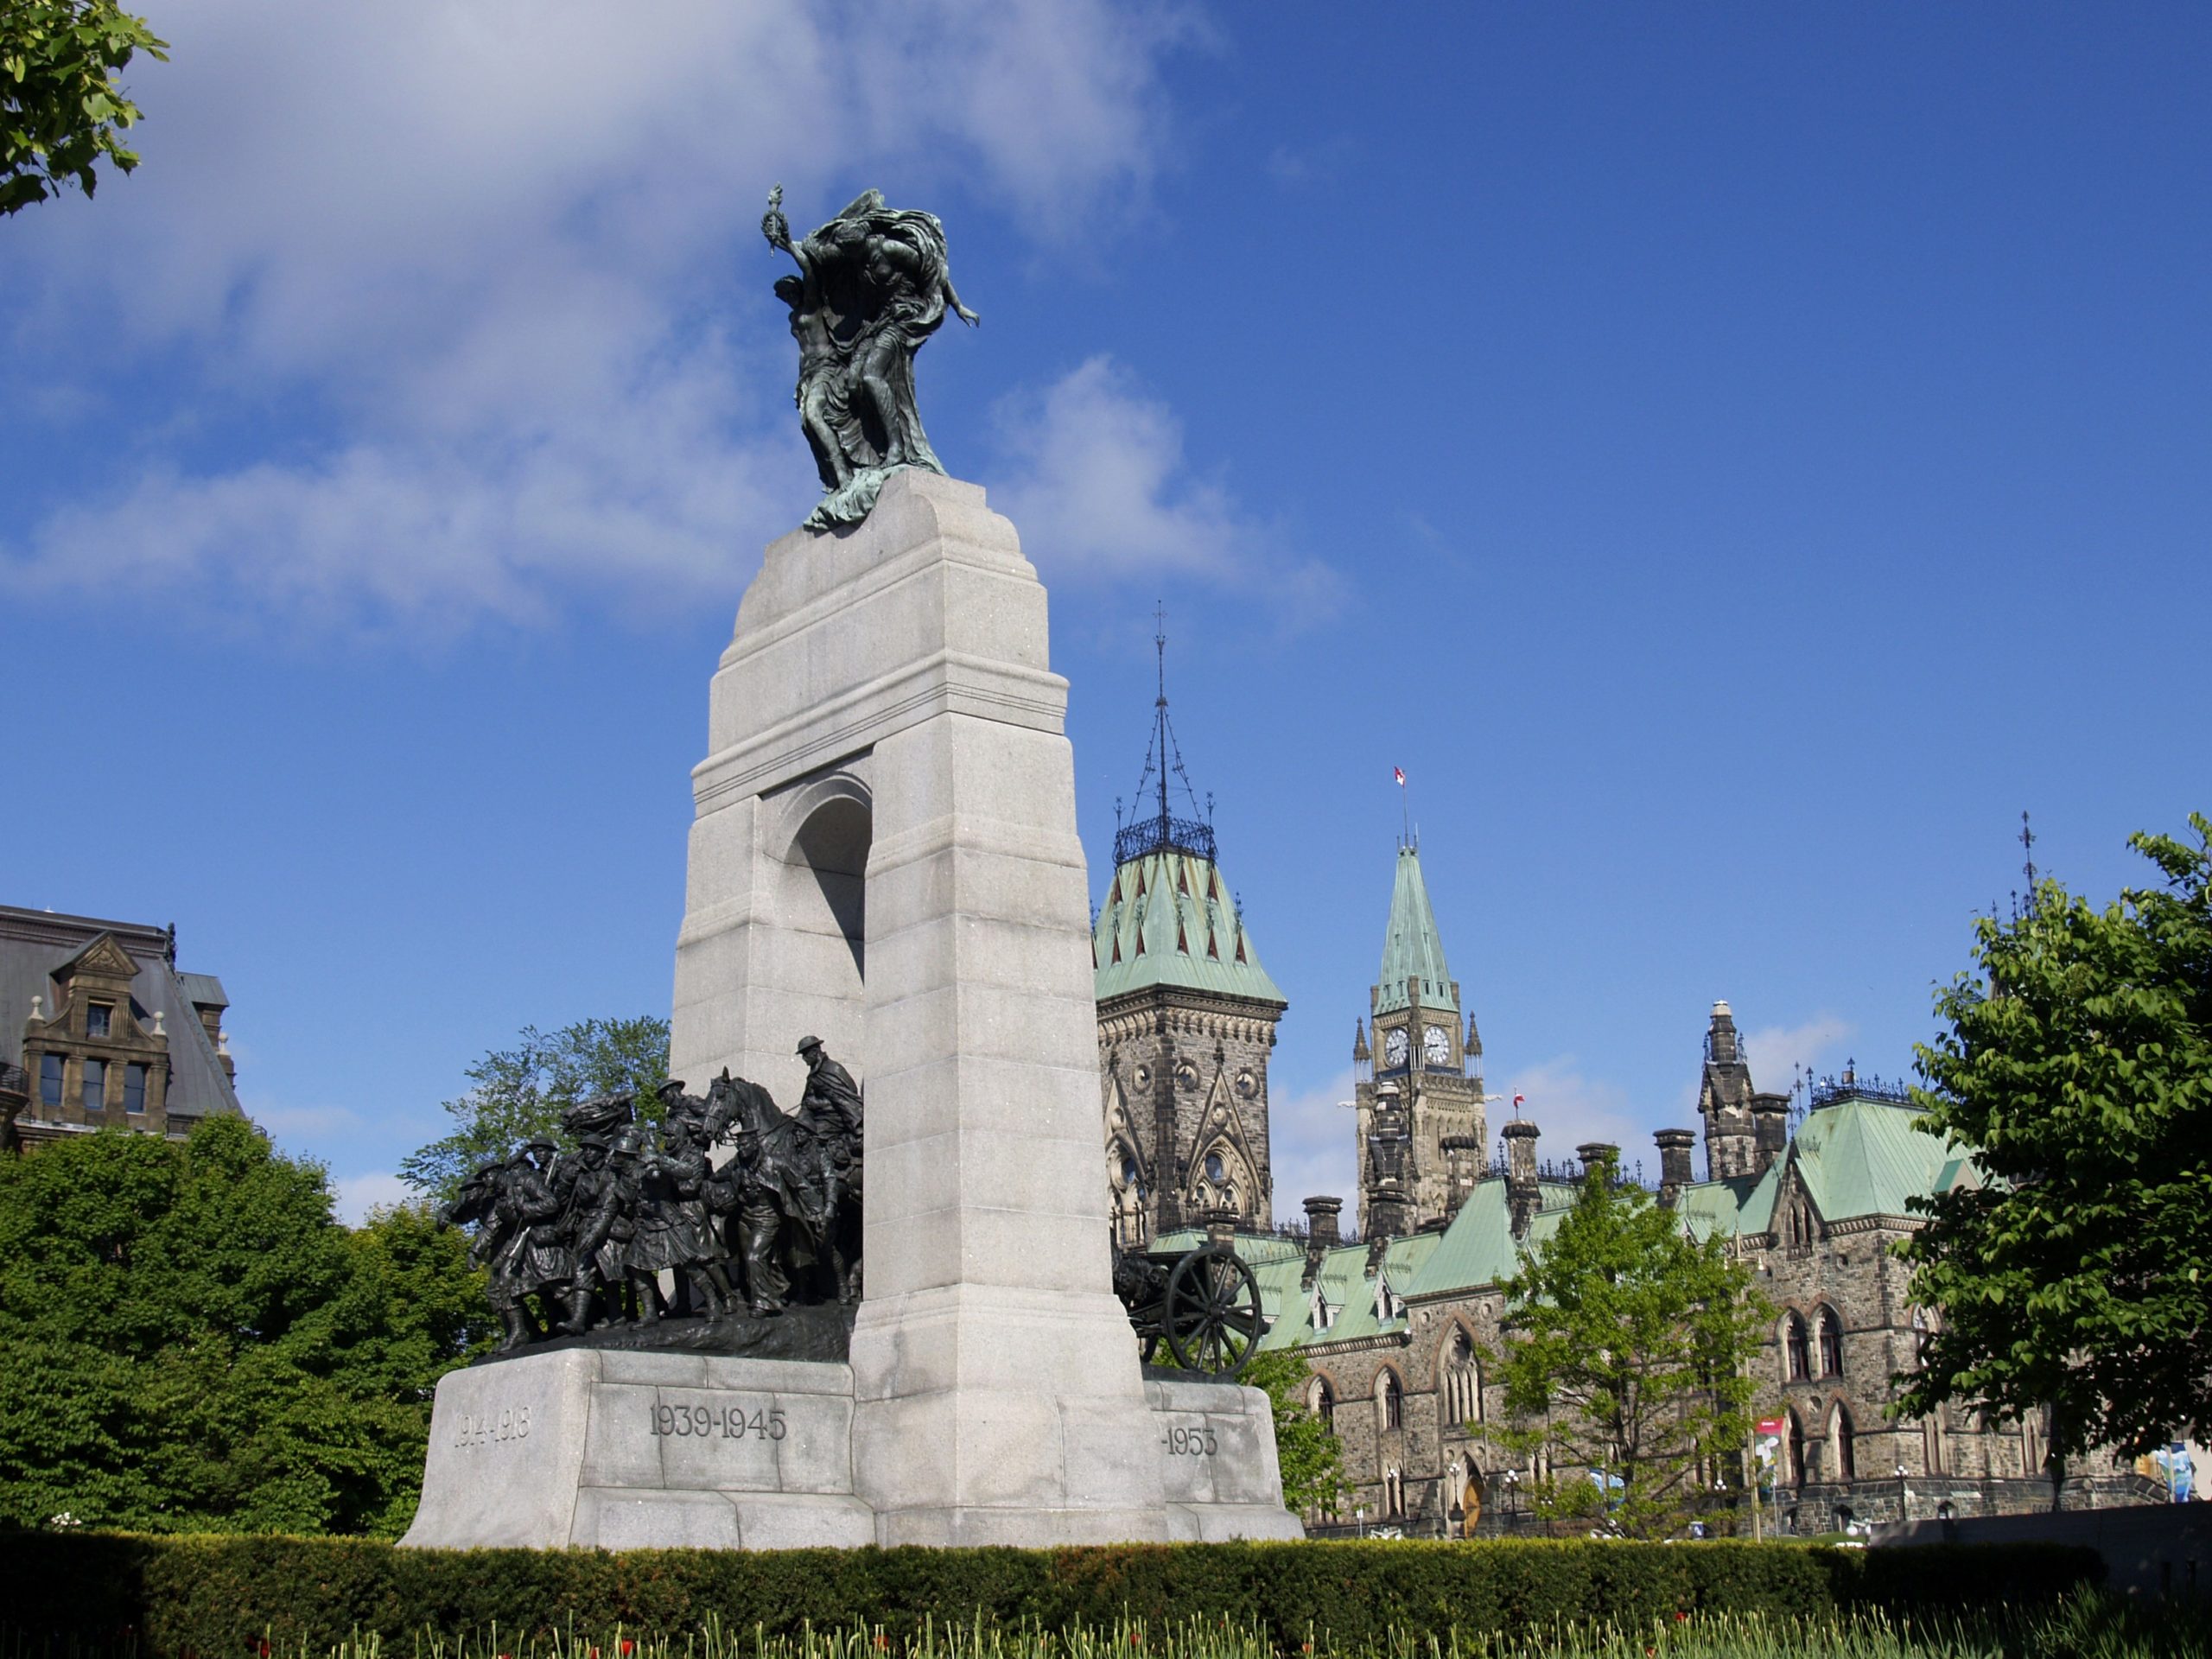 National War Memorial, Ottawa